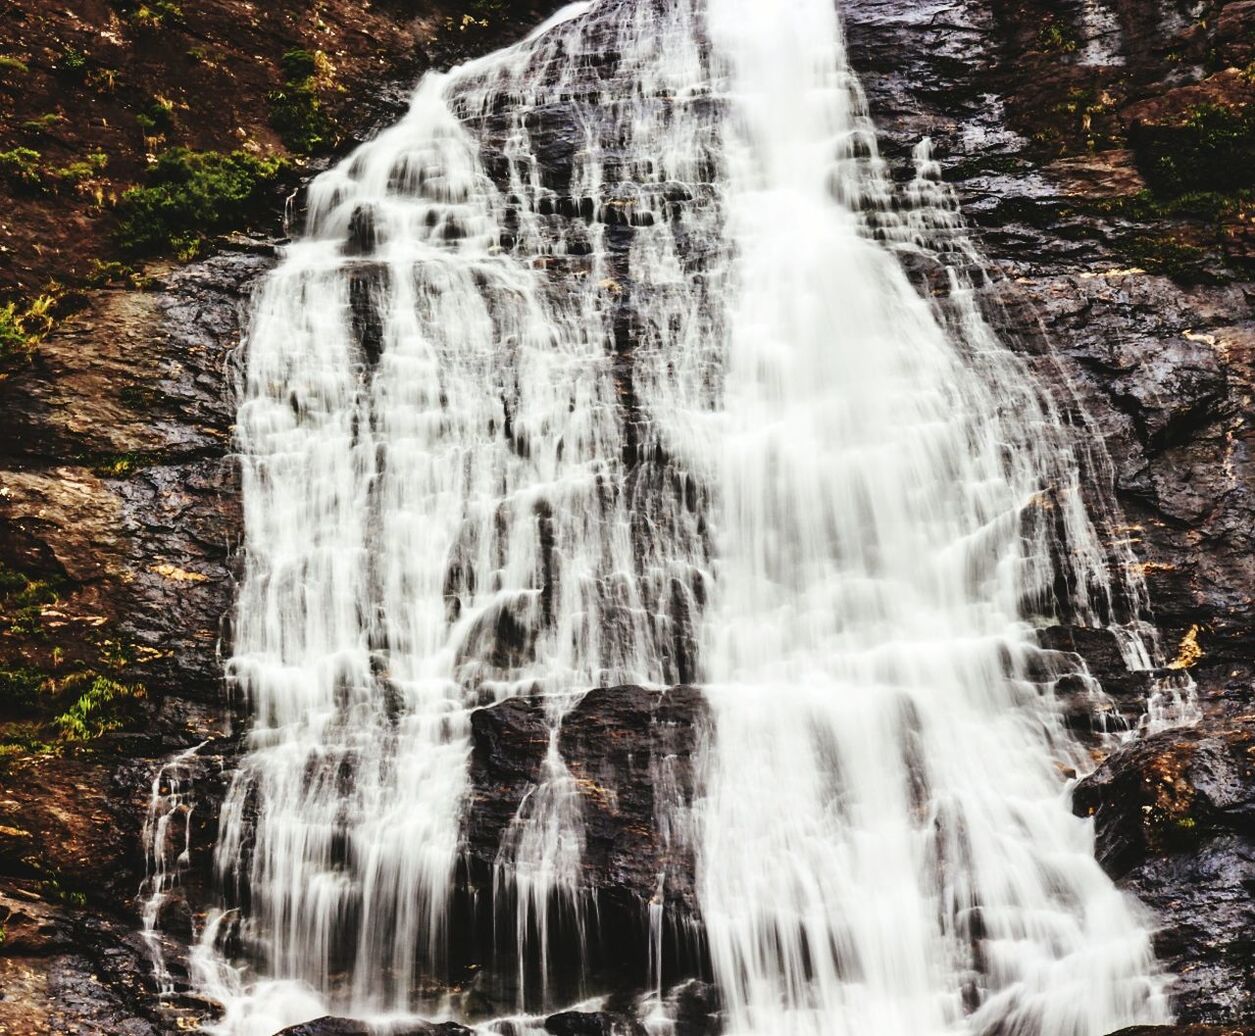 Low angle view of waterfall along rocks